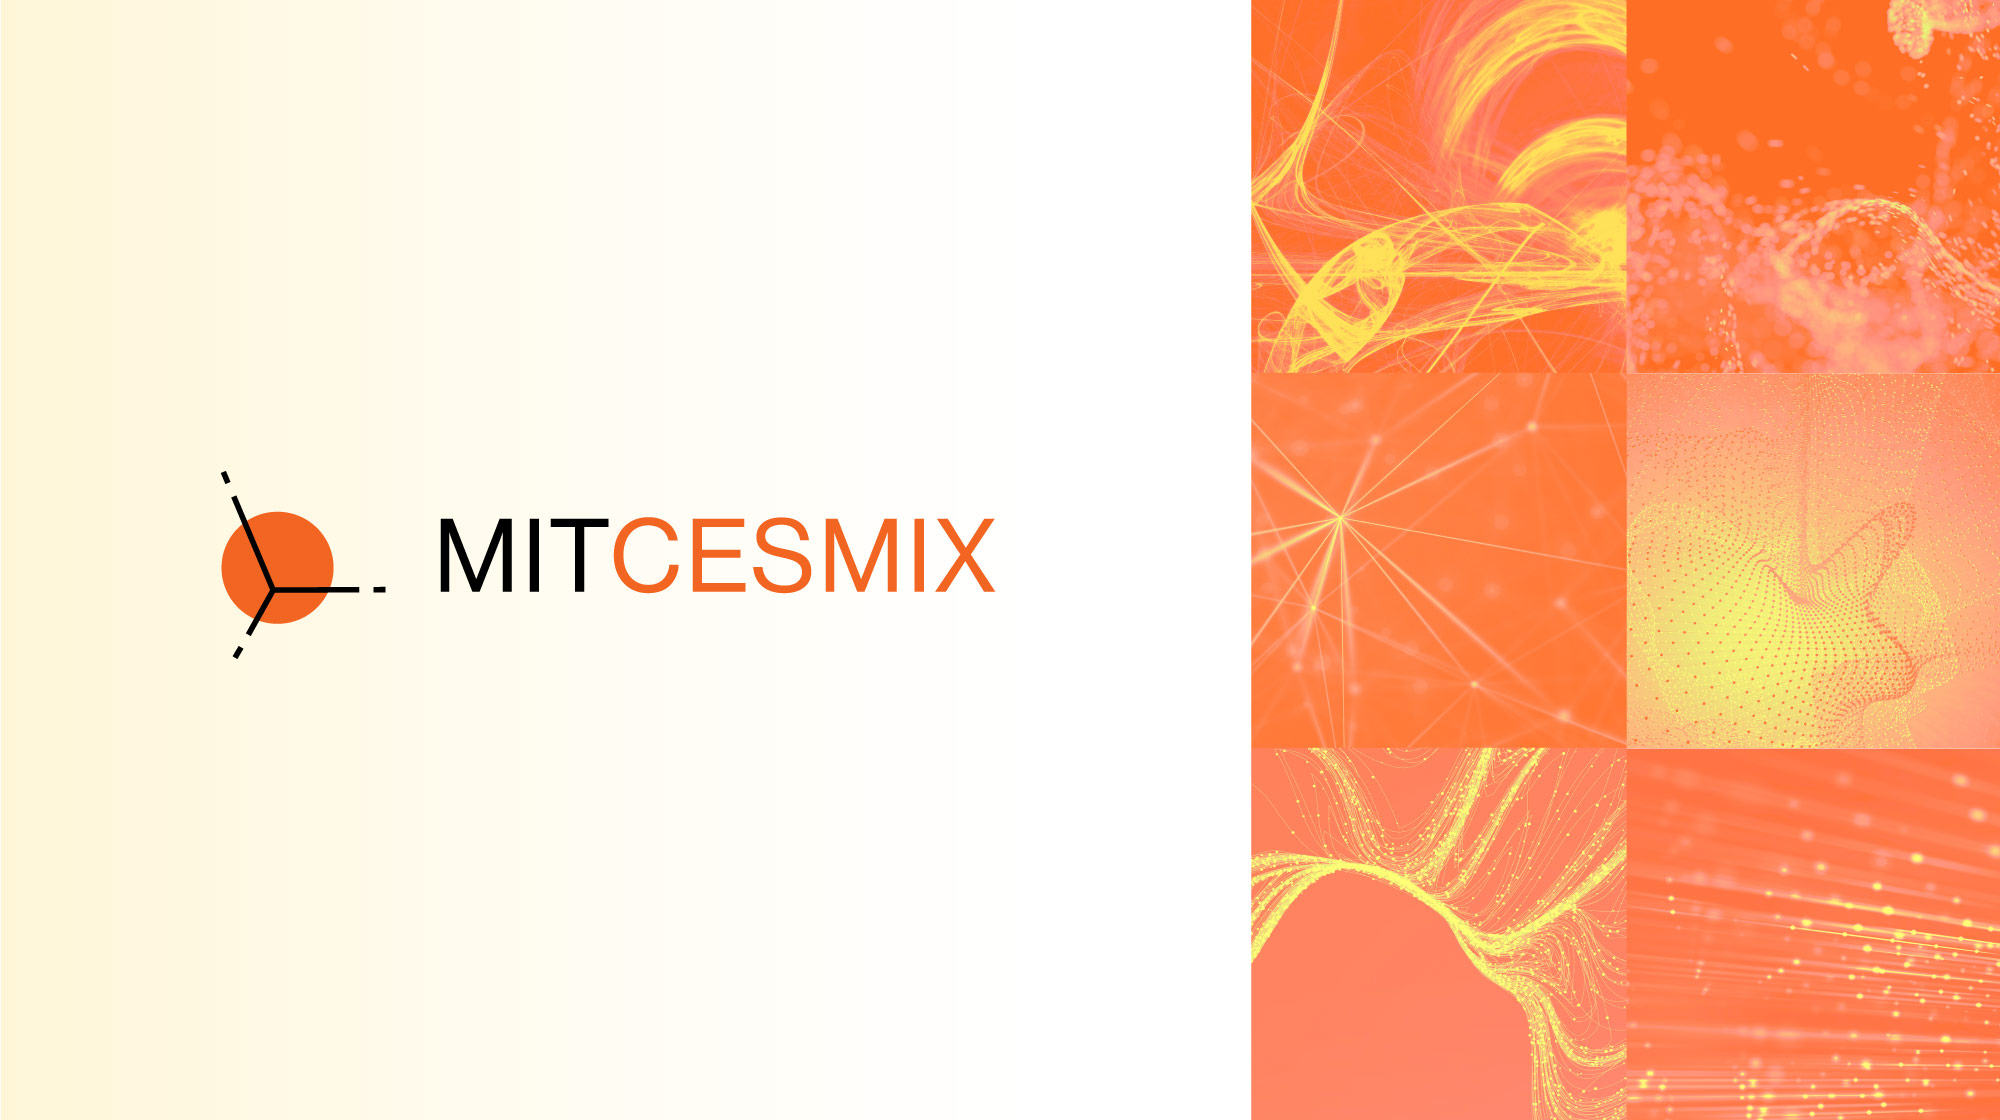 MIT CESMIX logo and photo collage